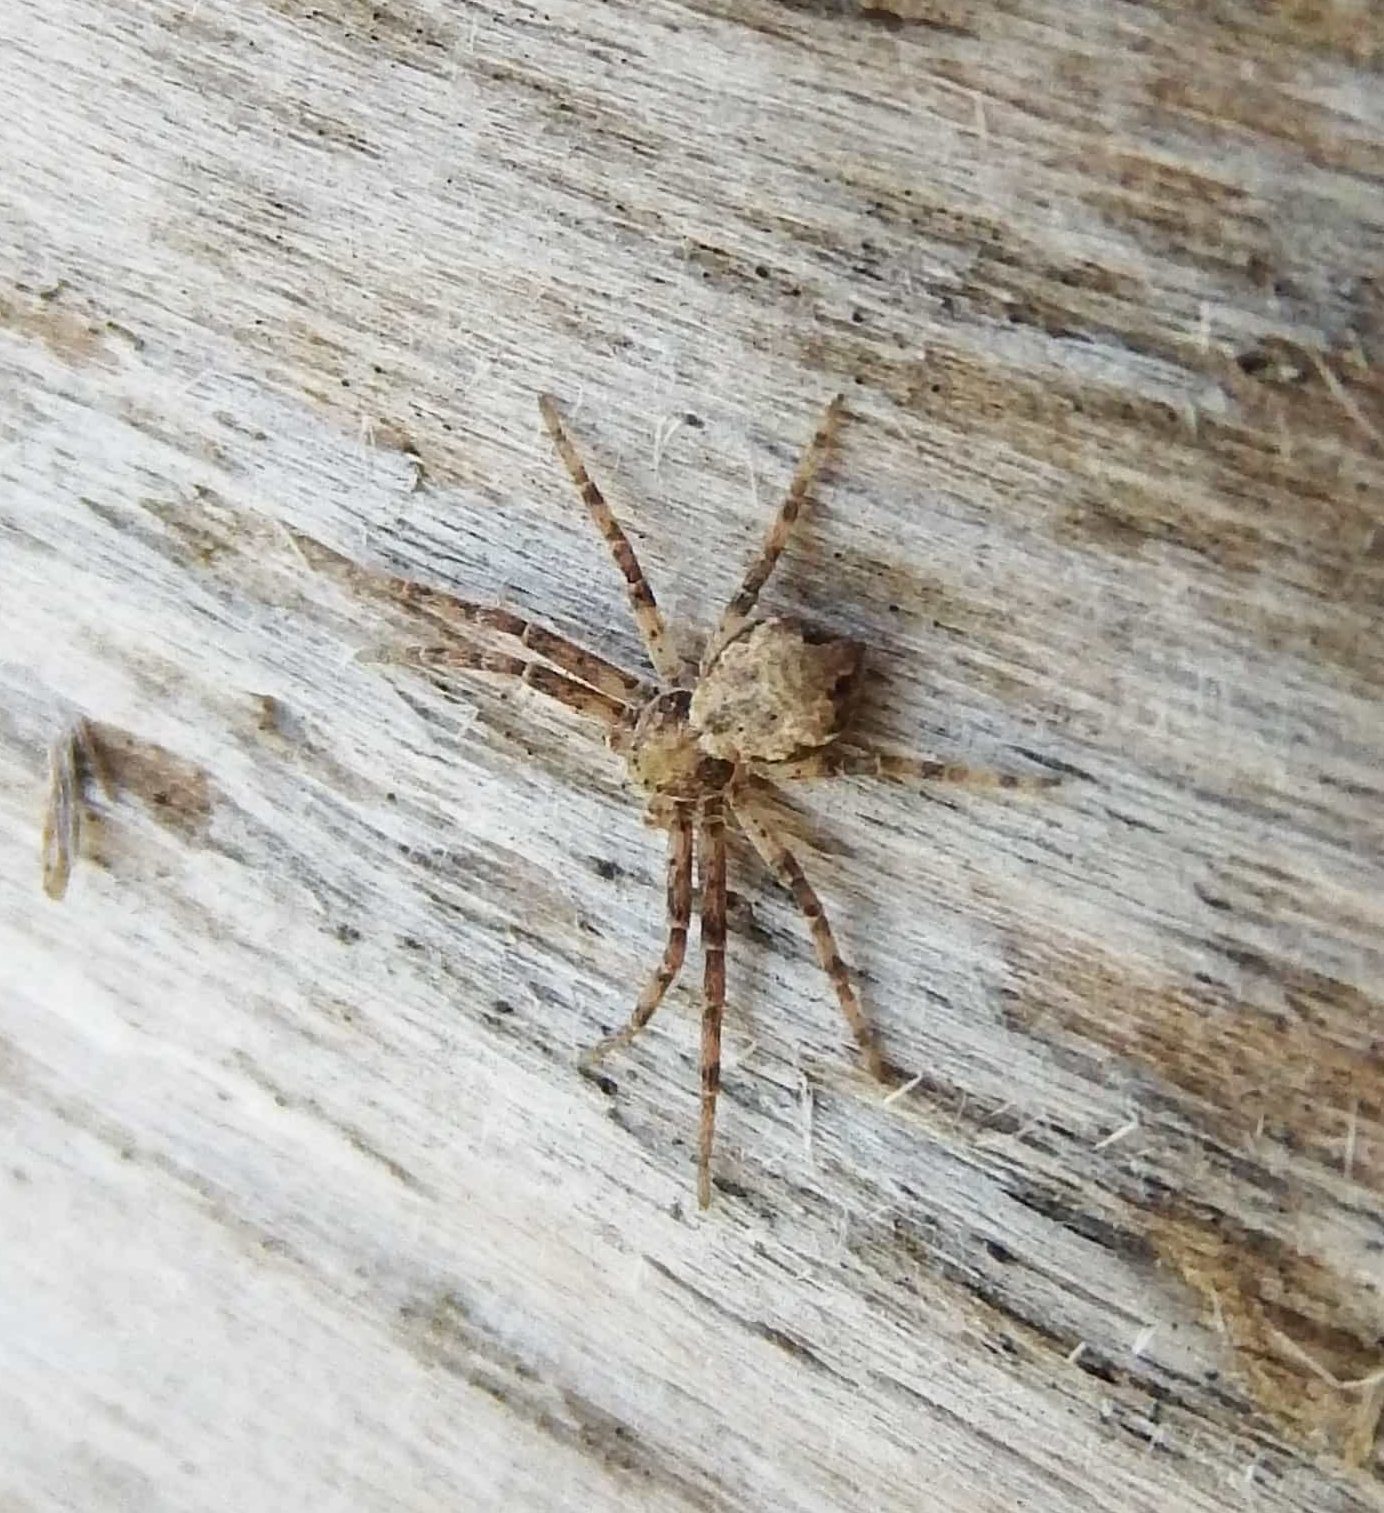 Unidentified spider in Toronto, Ontario Canada